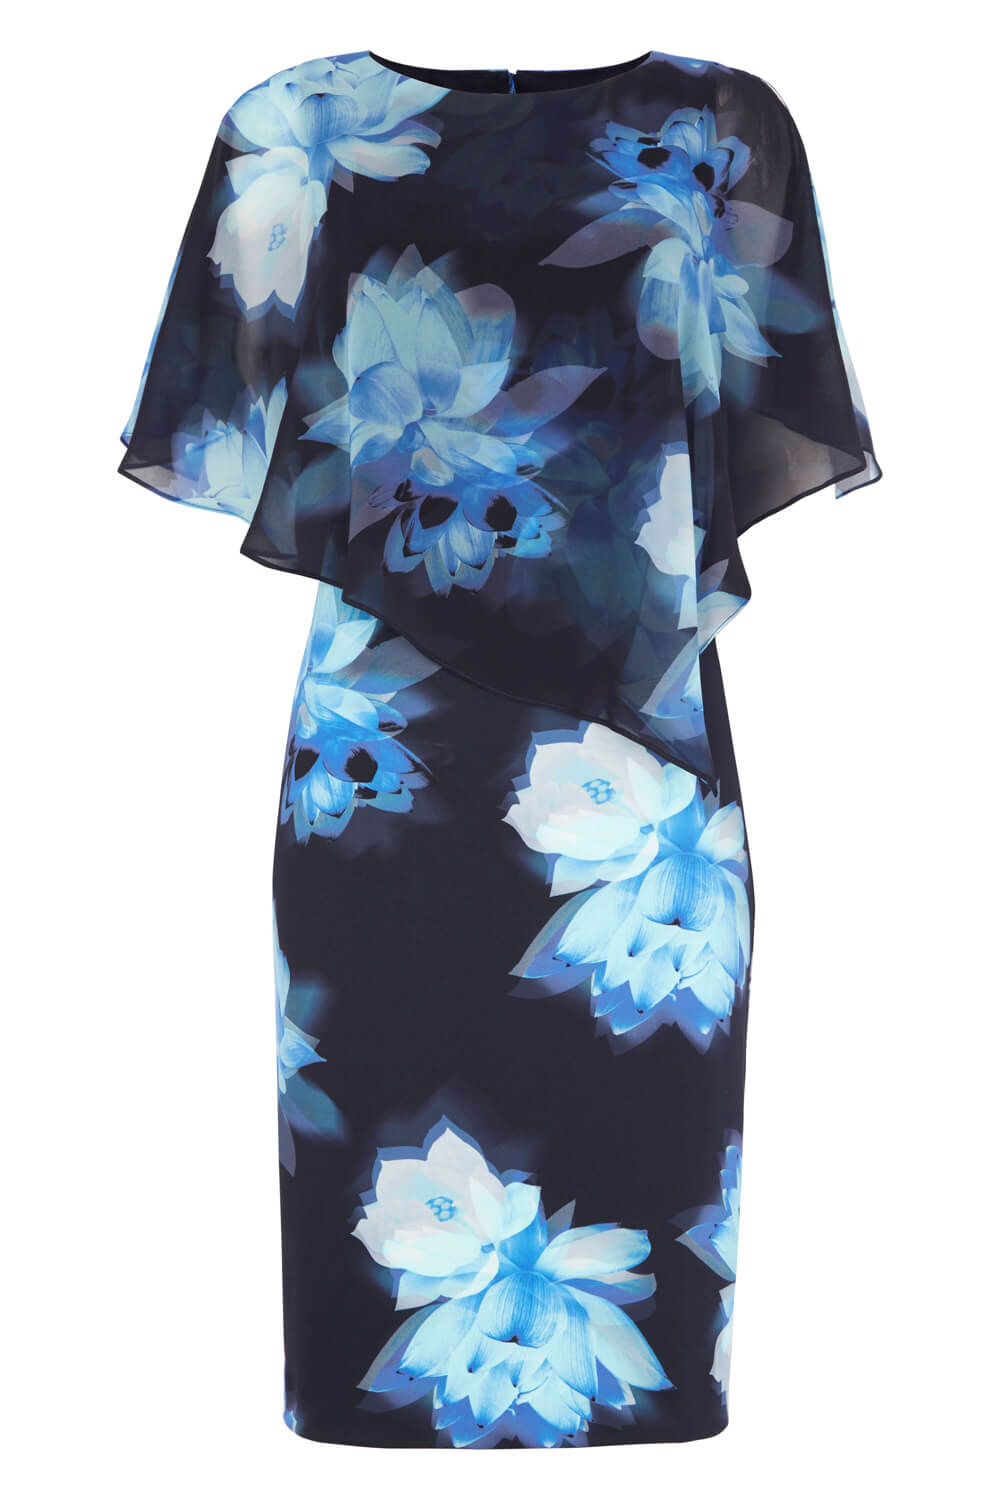 Blue Chiffon Layer Floral Print Scuba Dress, Image 5 of 5